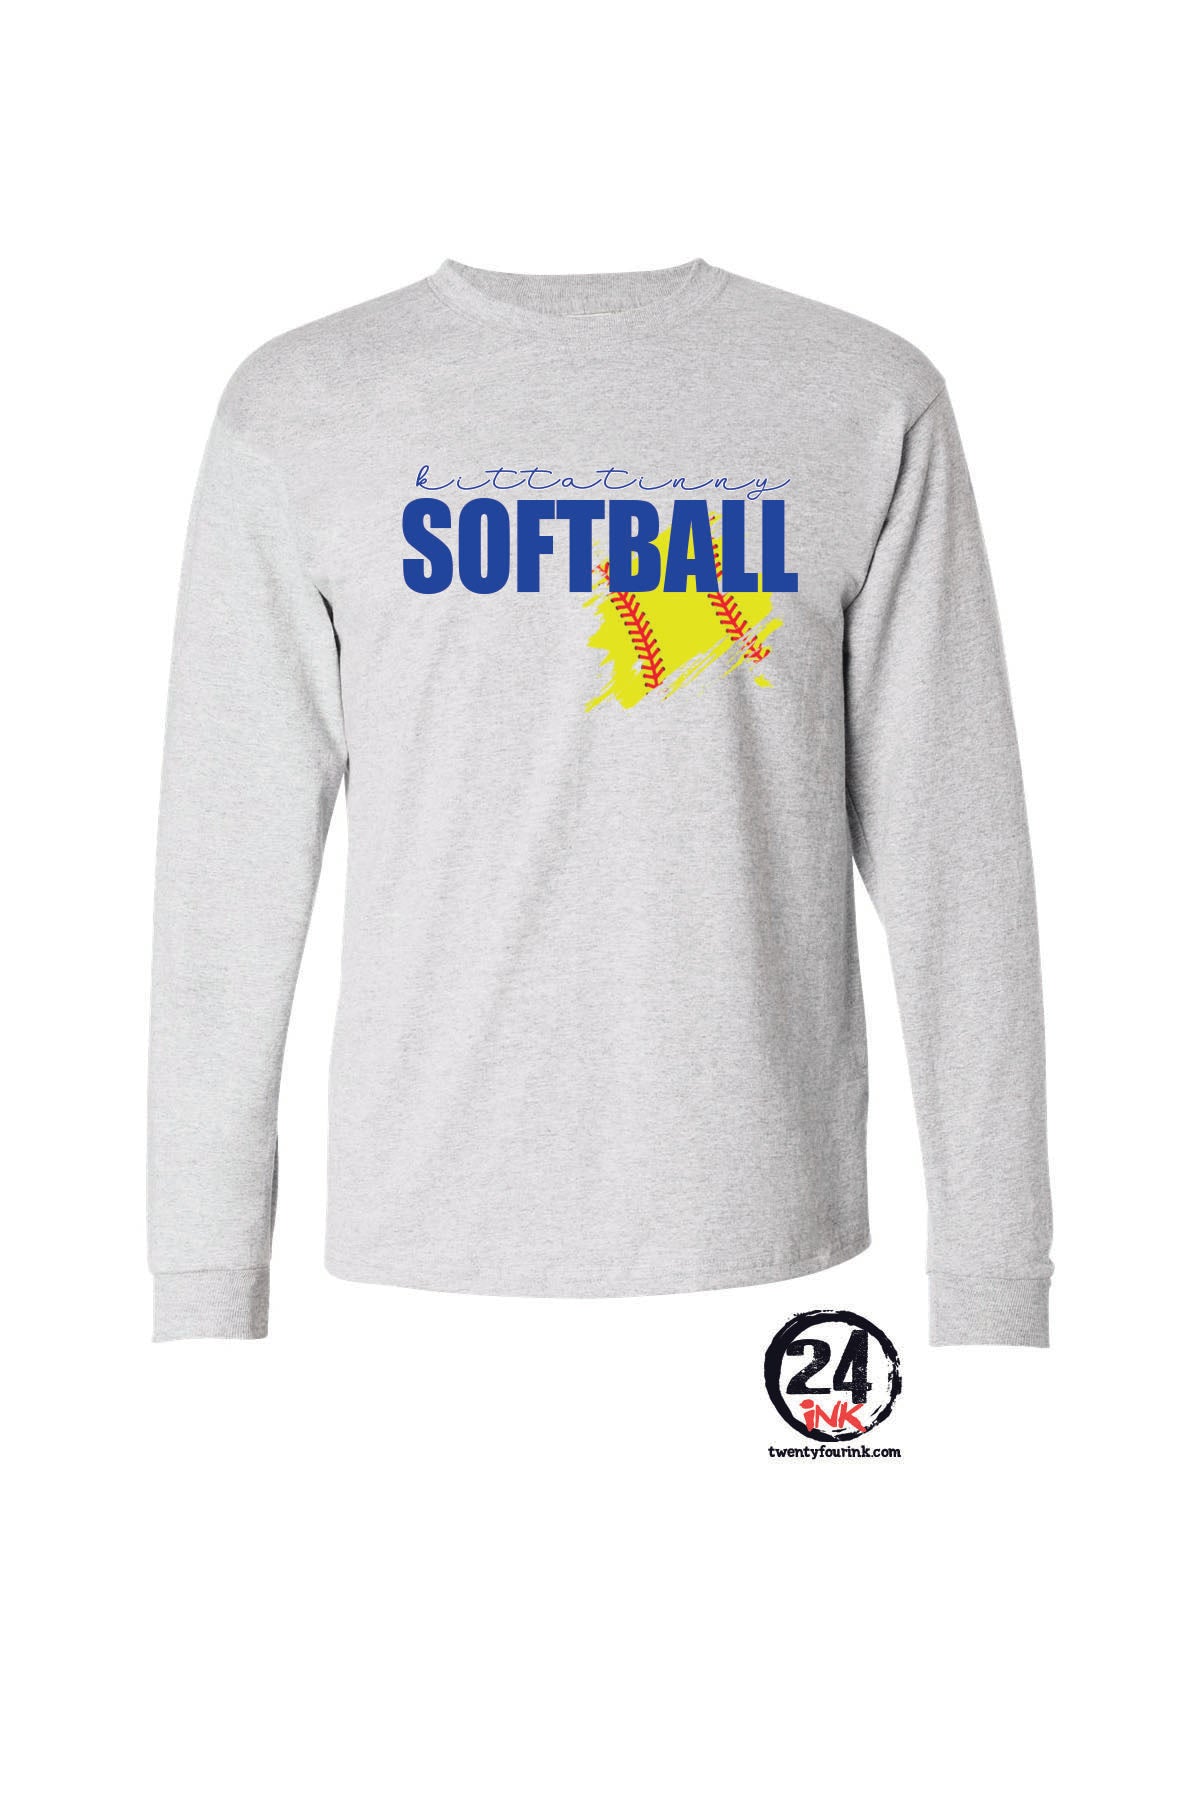 Kittatinny Softball Long Sleeve Shirt